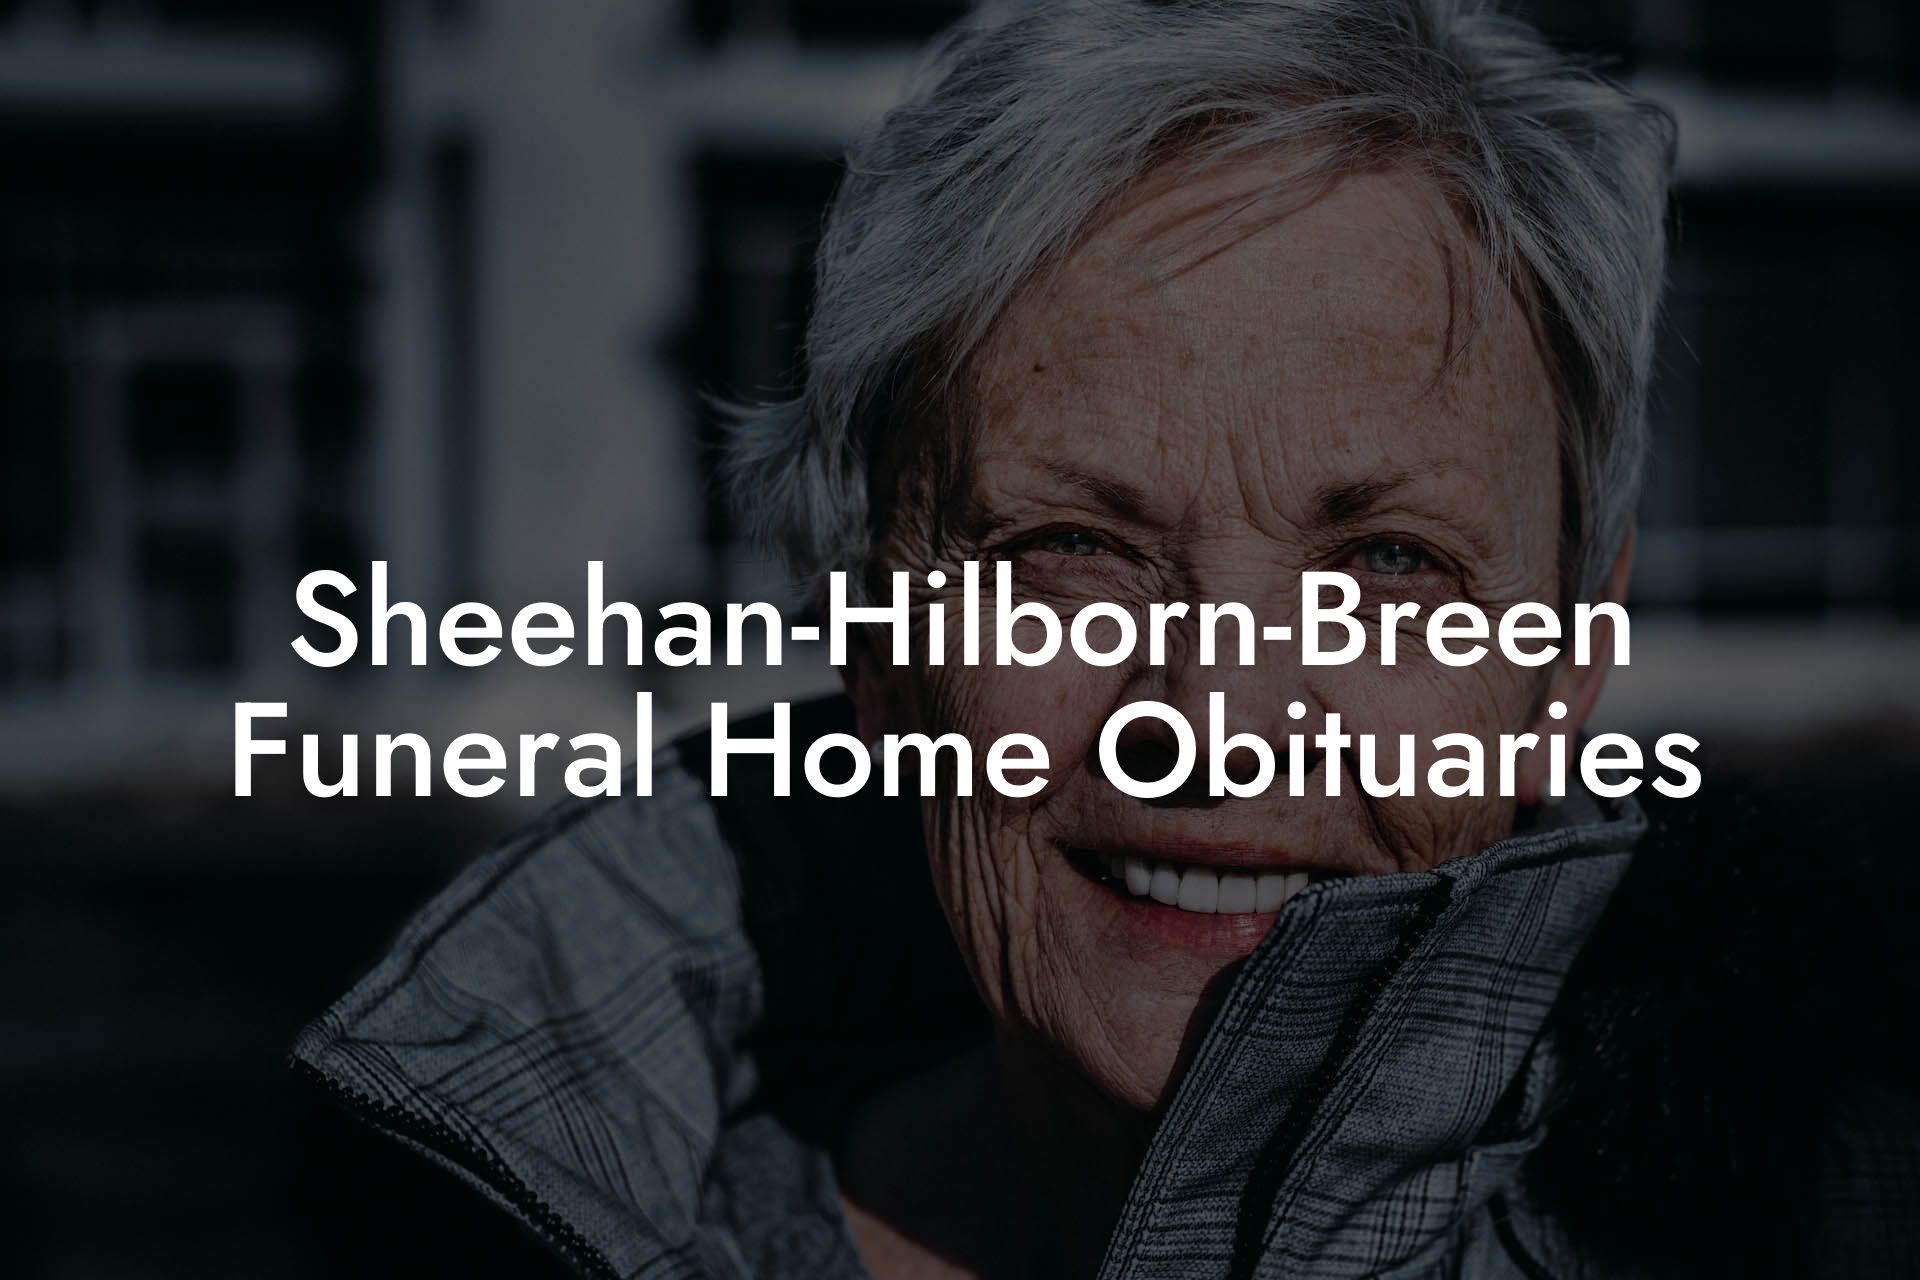 Sheehan-Hilborn-Breen Funeral Home Obituaries